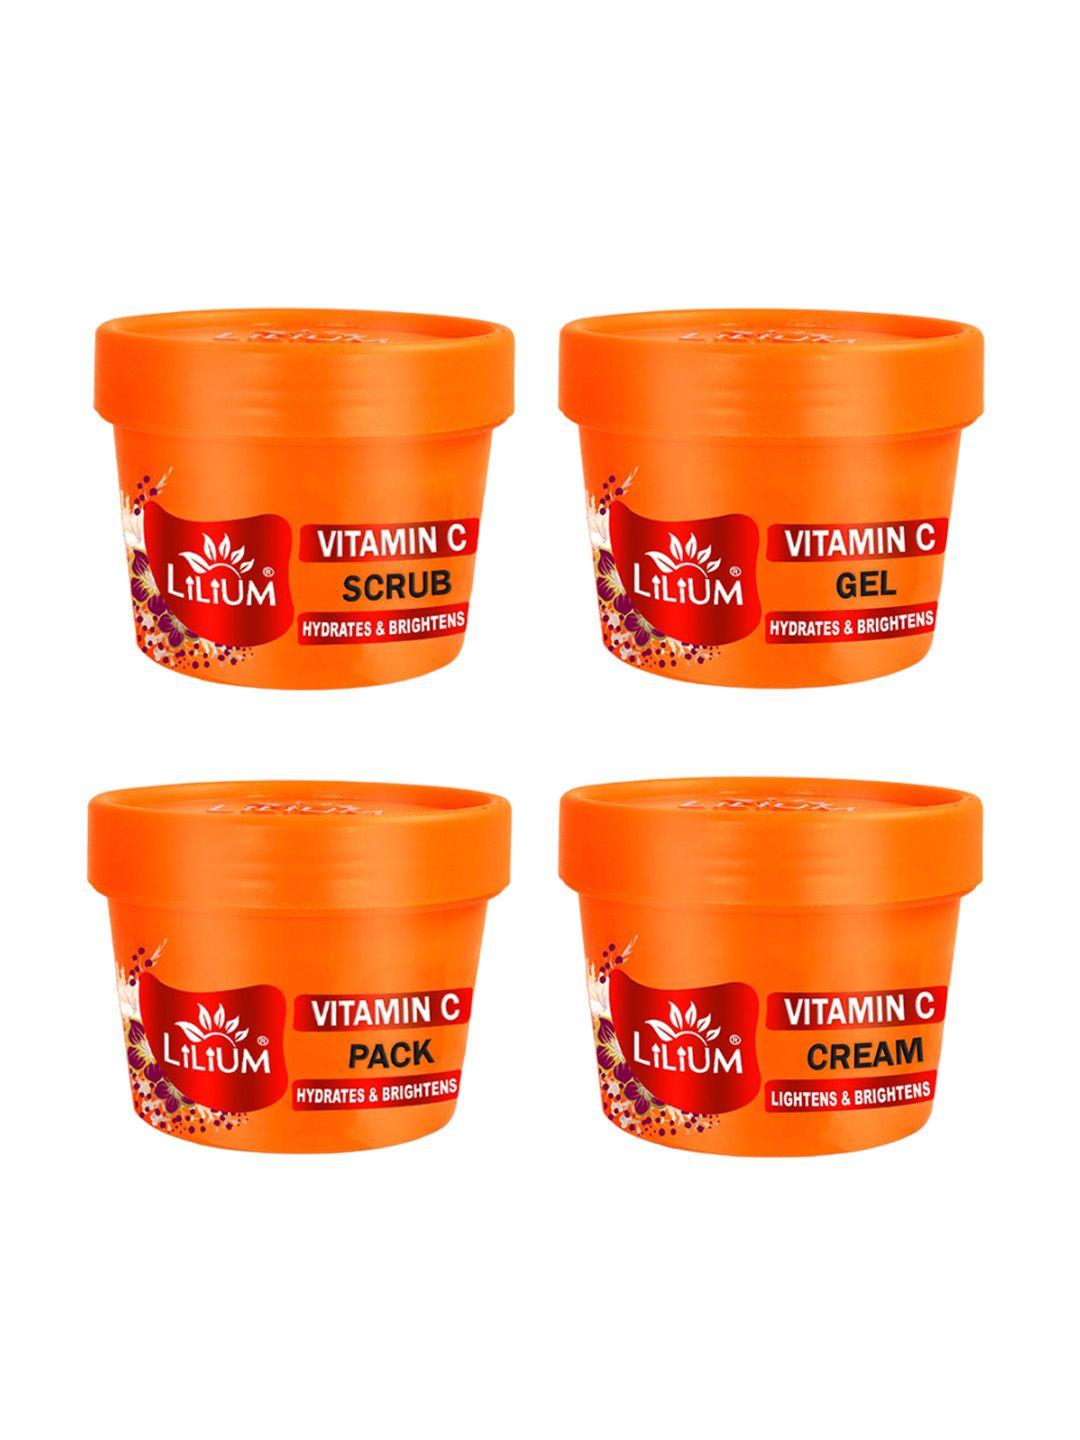 lilium vitamin c facial scrub gel pack cream set for hydration & brightening - 100g each